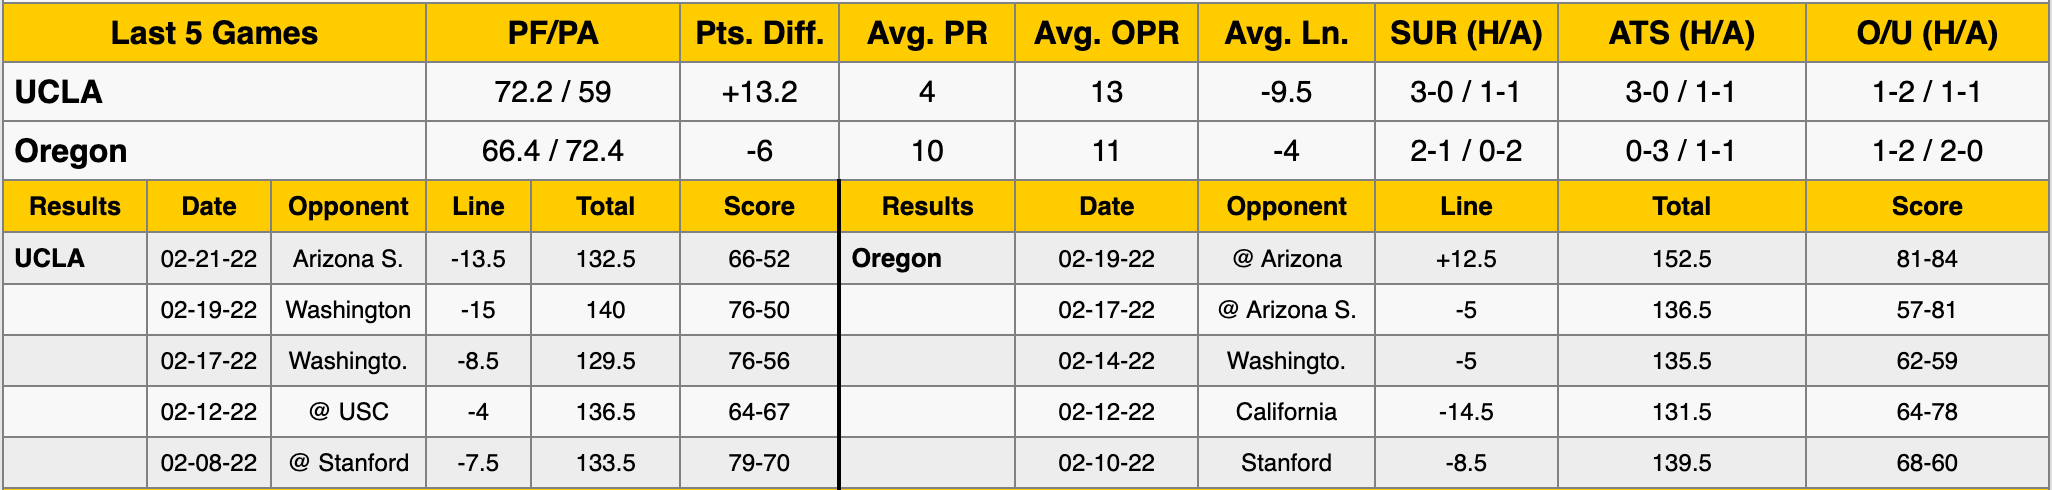 Oregon vs UCLA Data